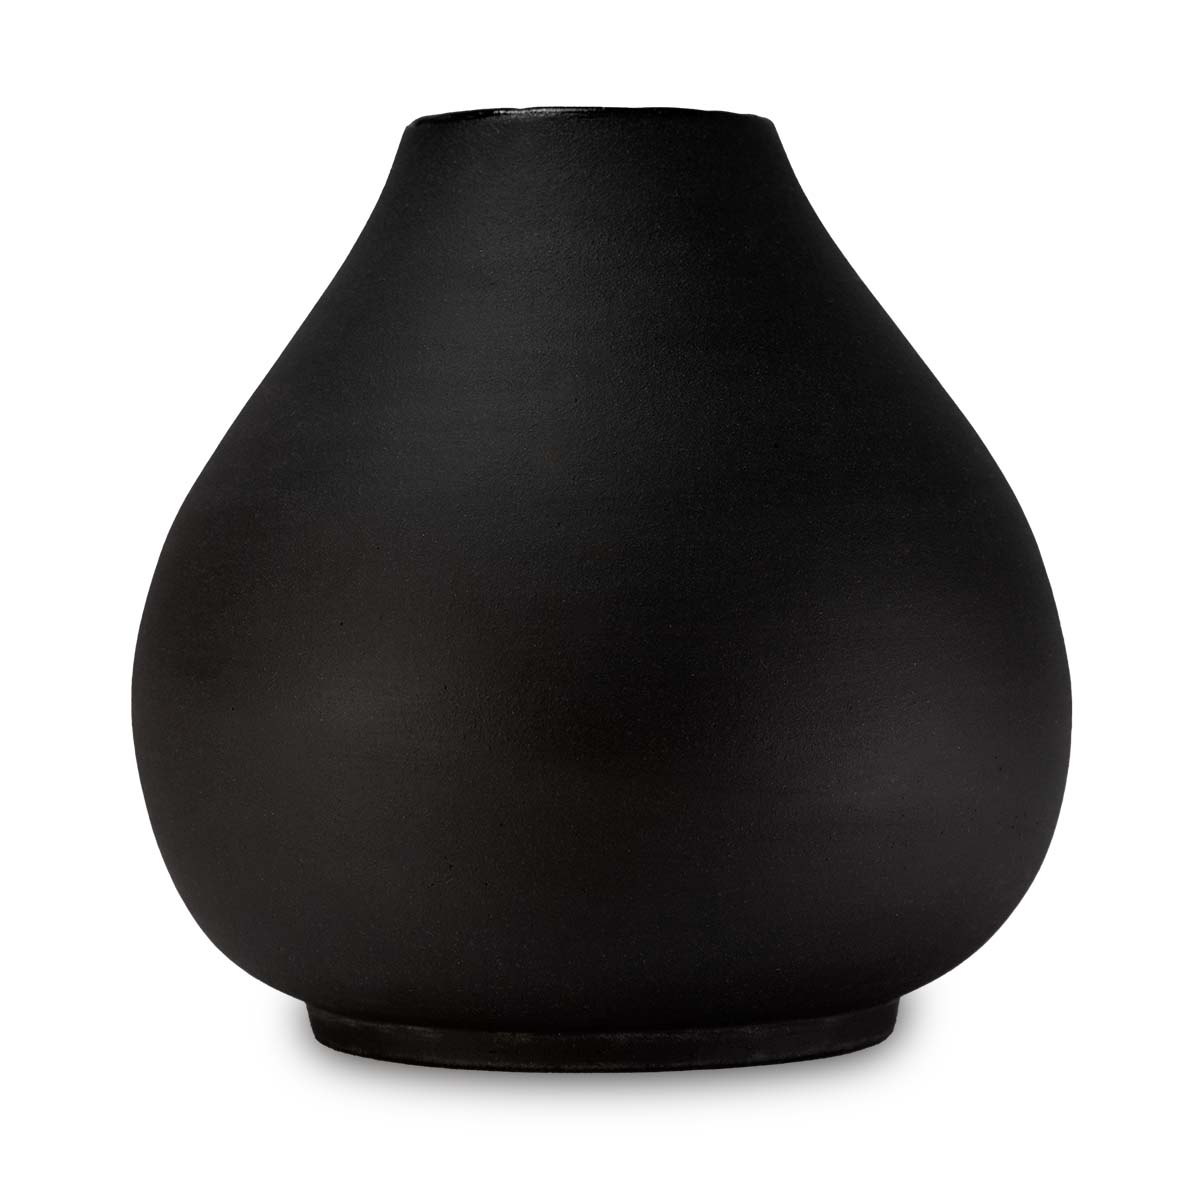 Vase 17cm schwarz ton keramik porzellan